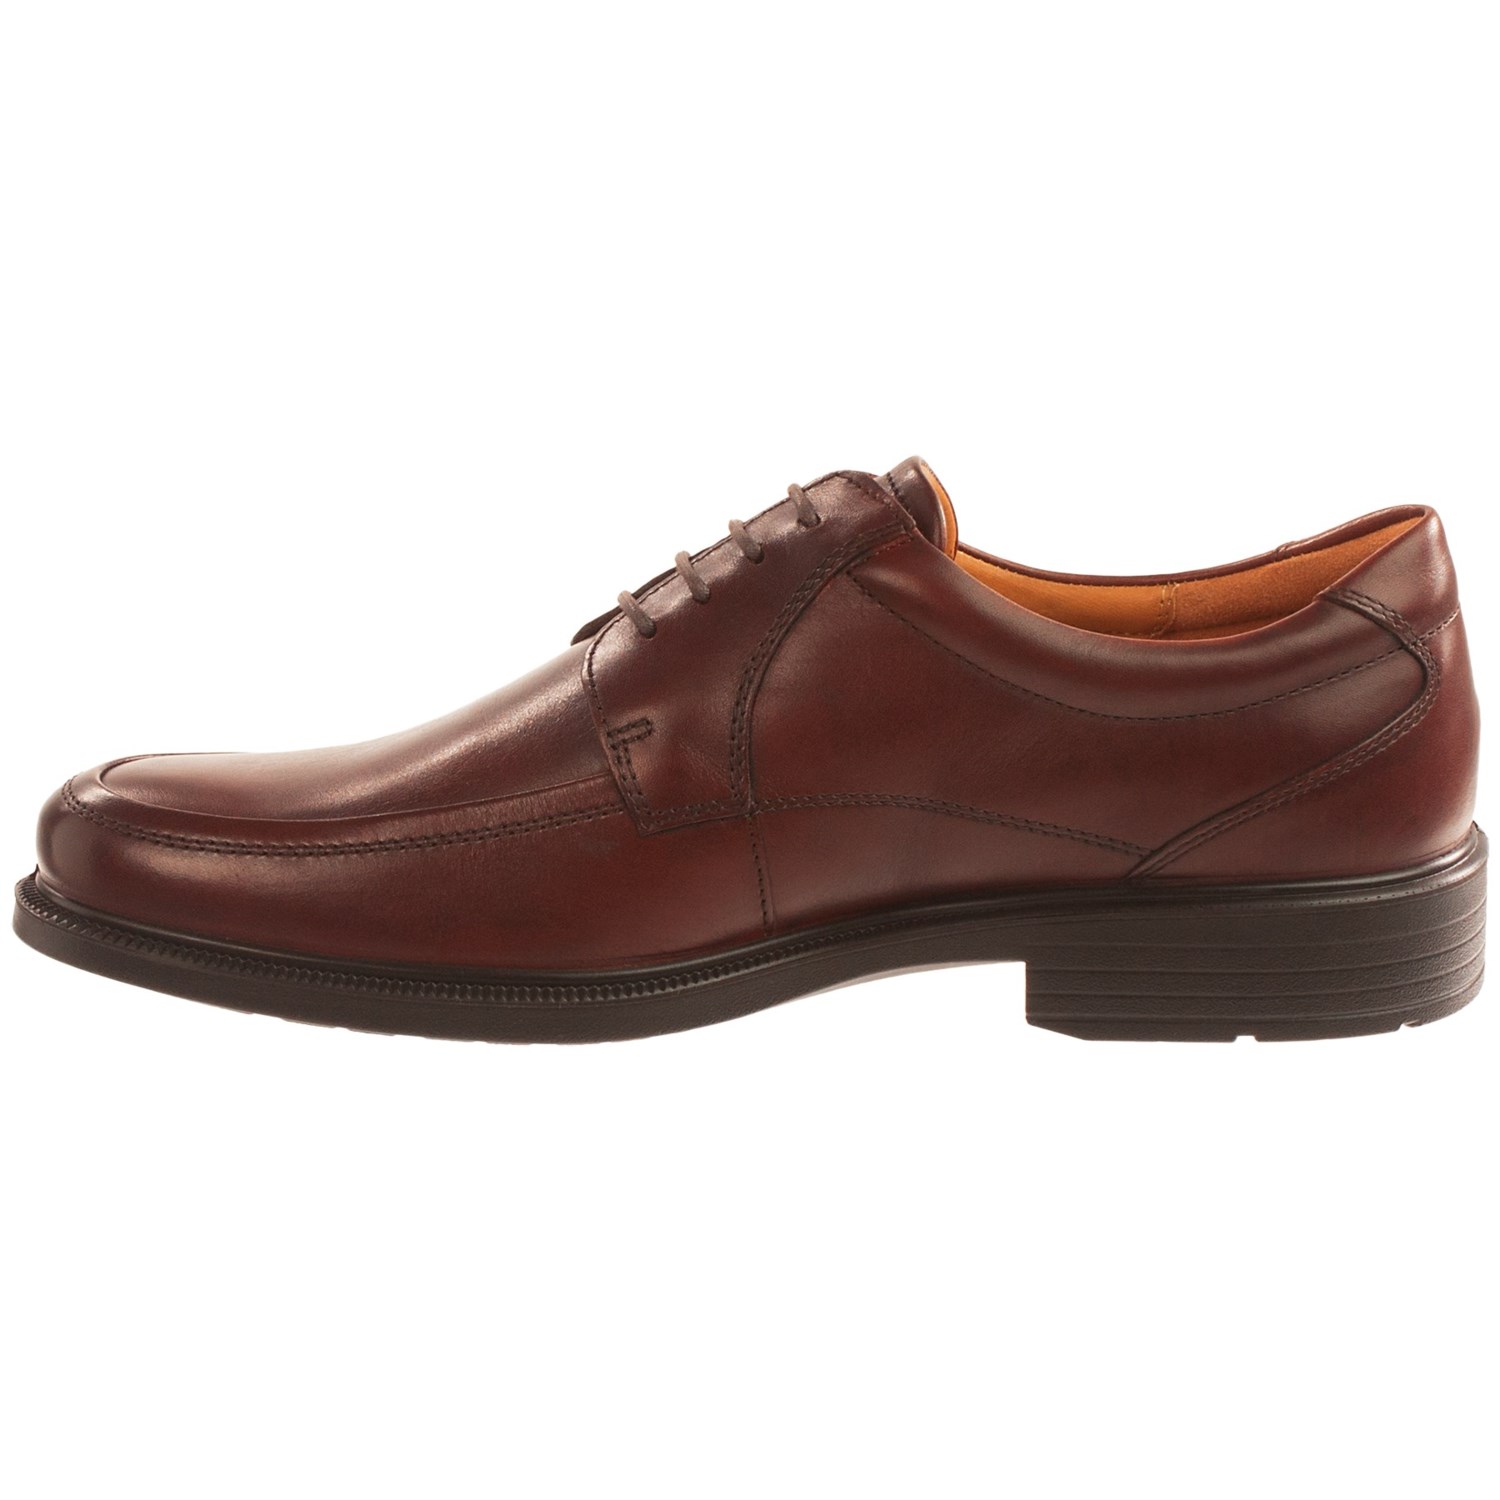 ECCO Dublin Apron Toe Oxford Shoes (For Men) 9441G - Save 50%